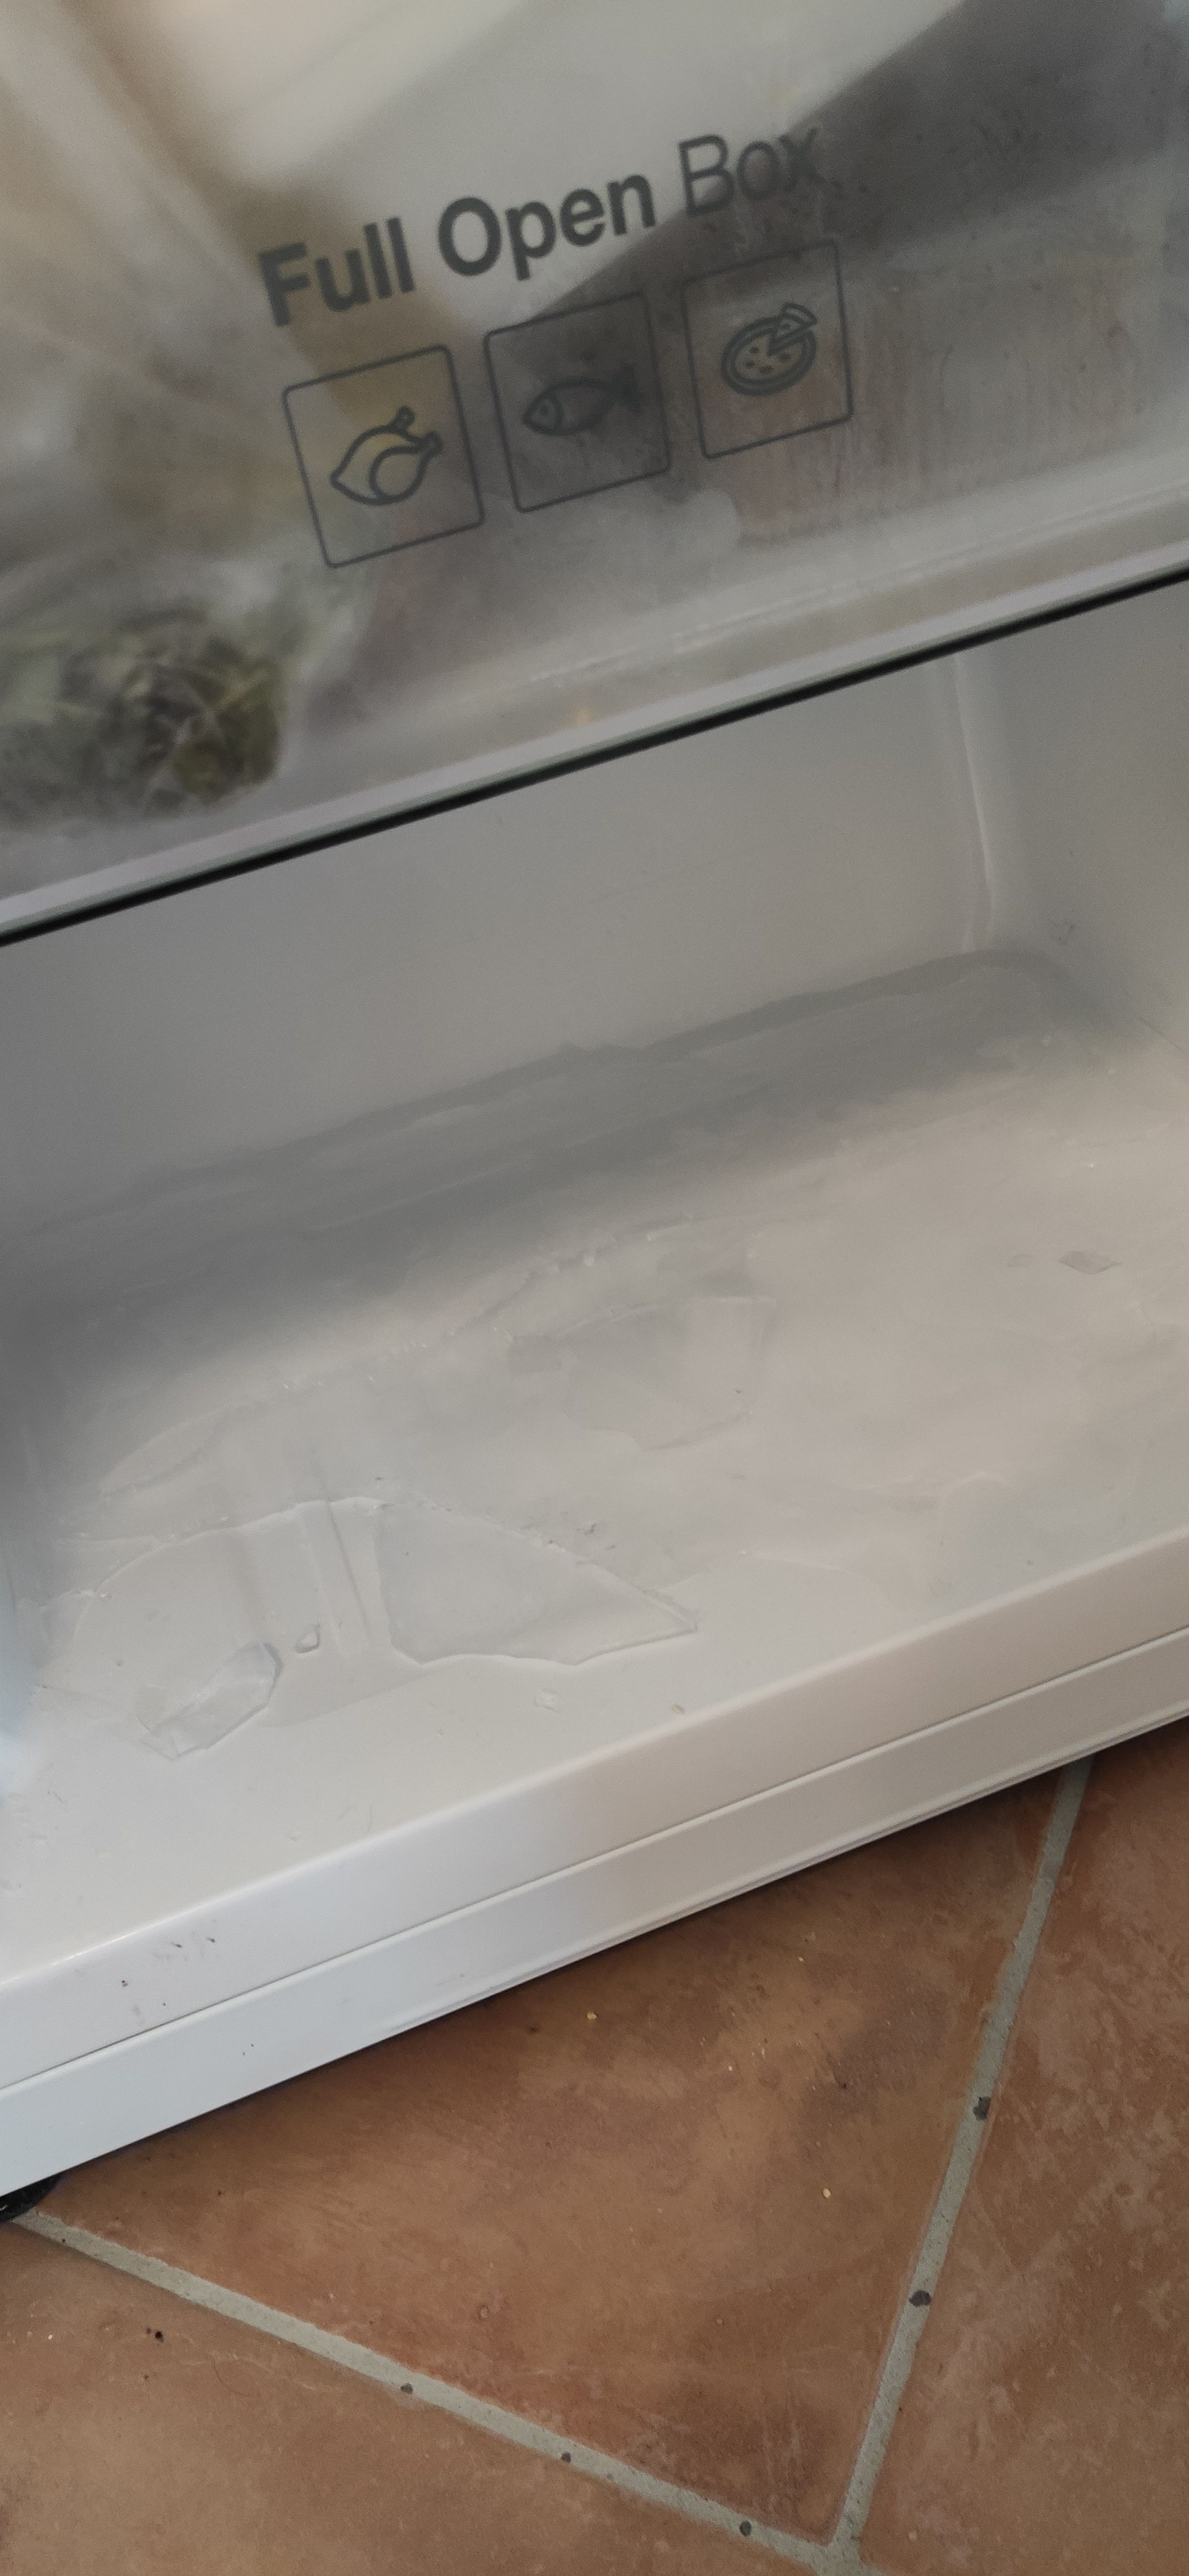 Frig no frost RL52VEBIH ghiaccio nel freezer - Pagina 3 - Samsung Community